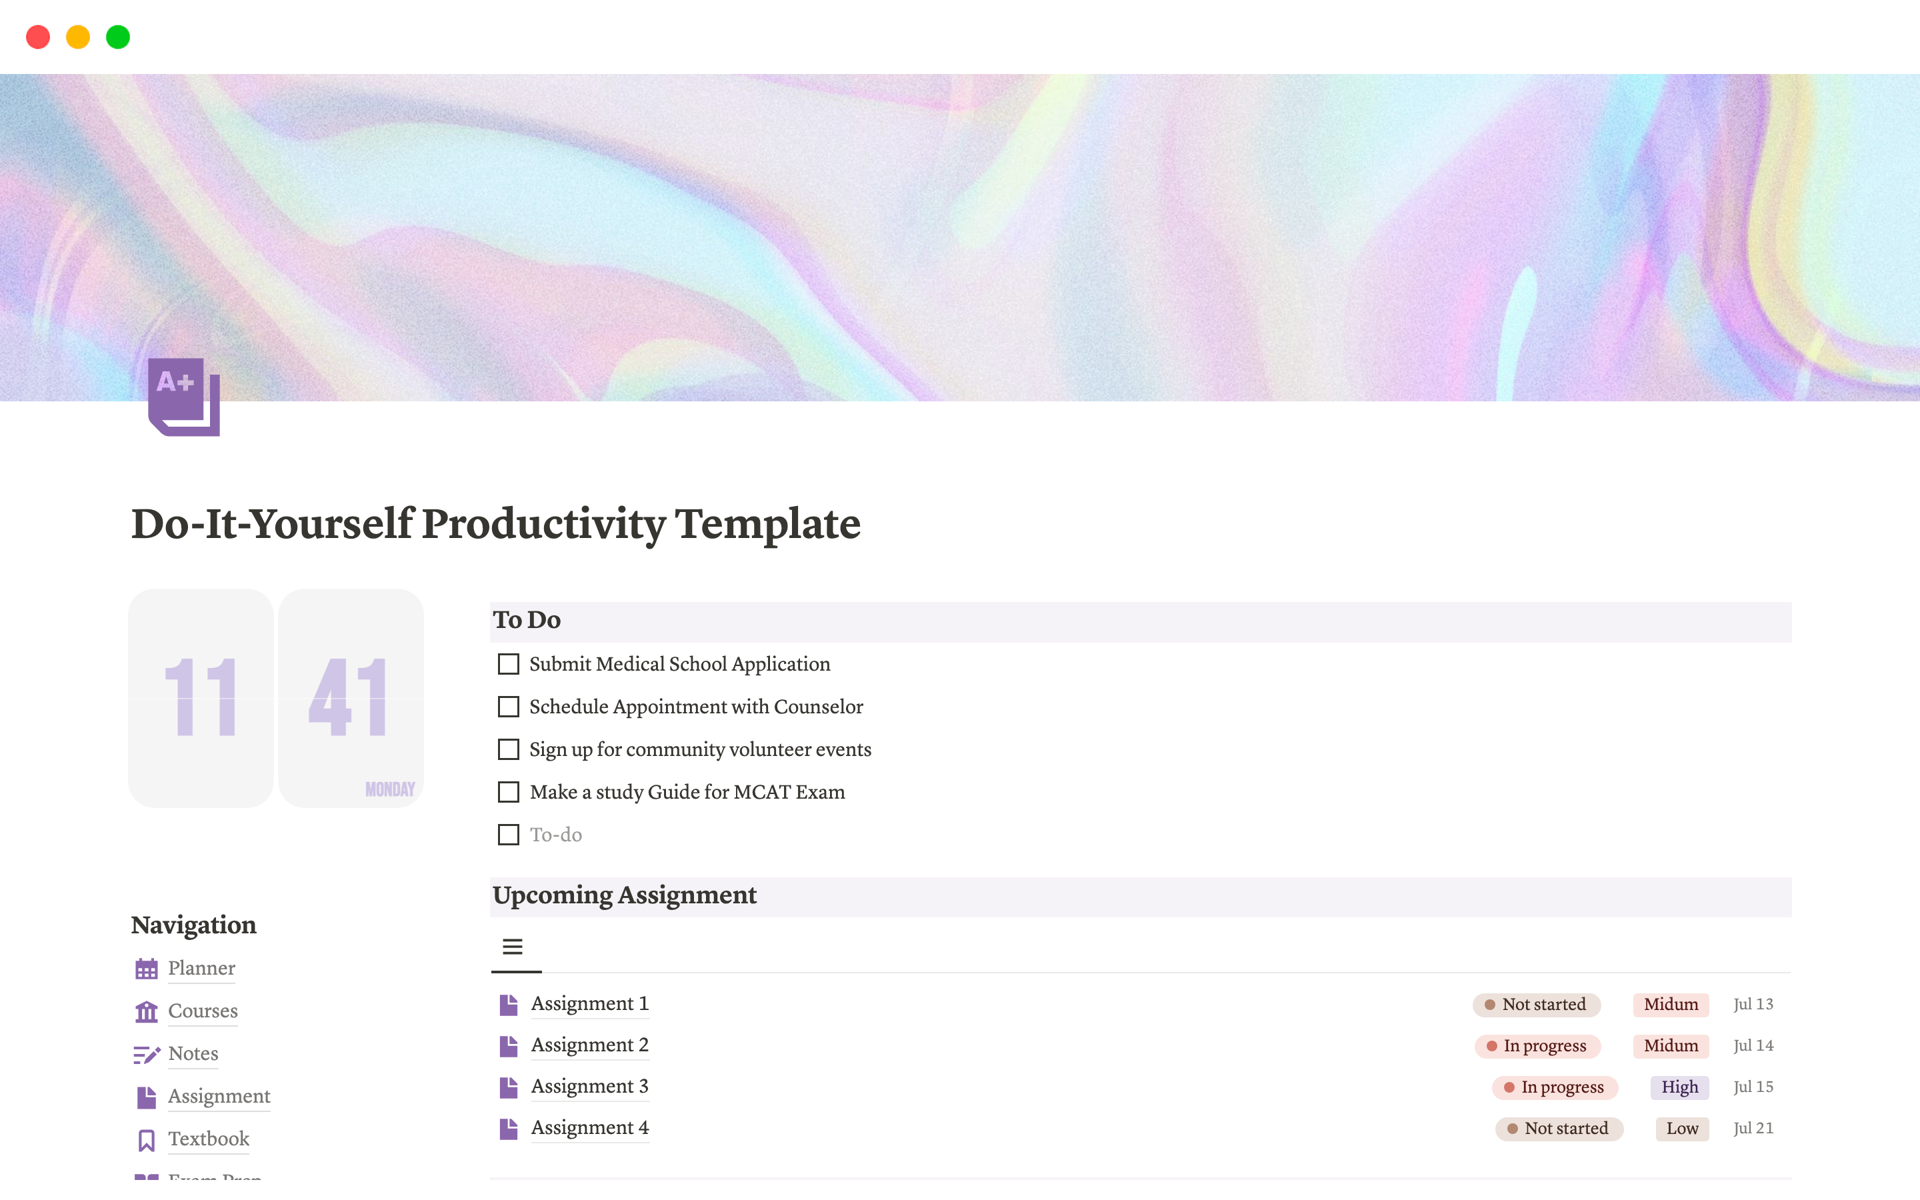 Do-It-Yourself Productivity Template for Students님의 템플릿 미리보기